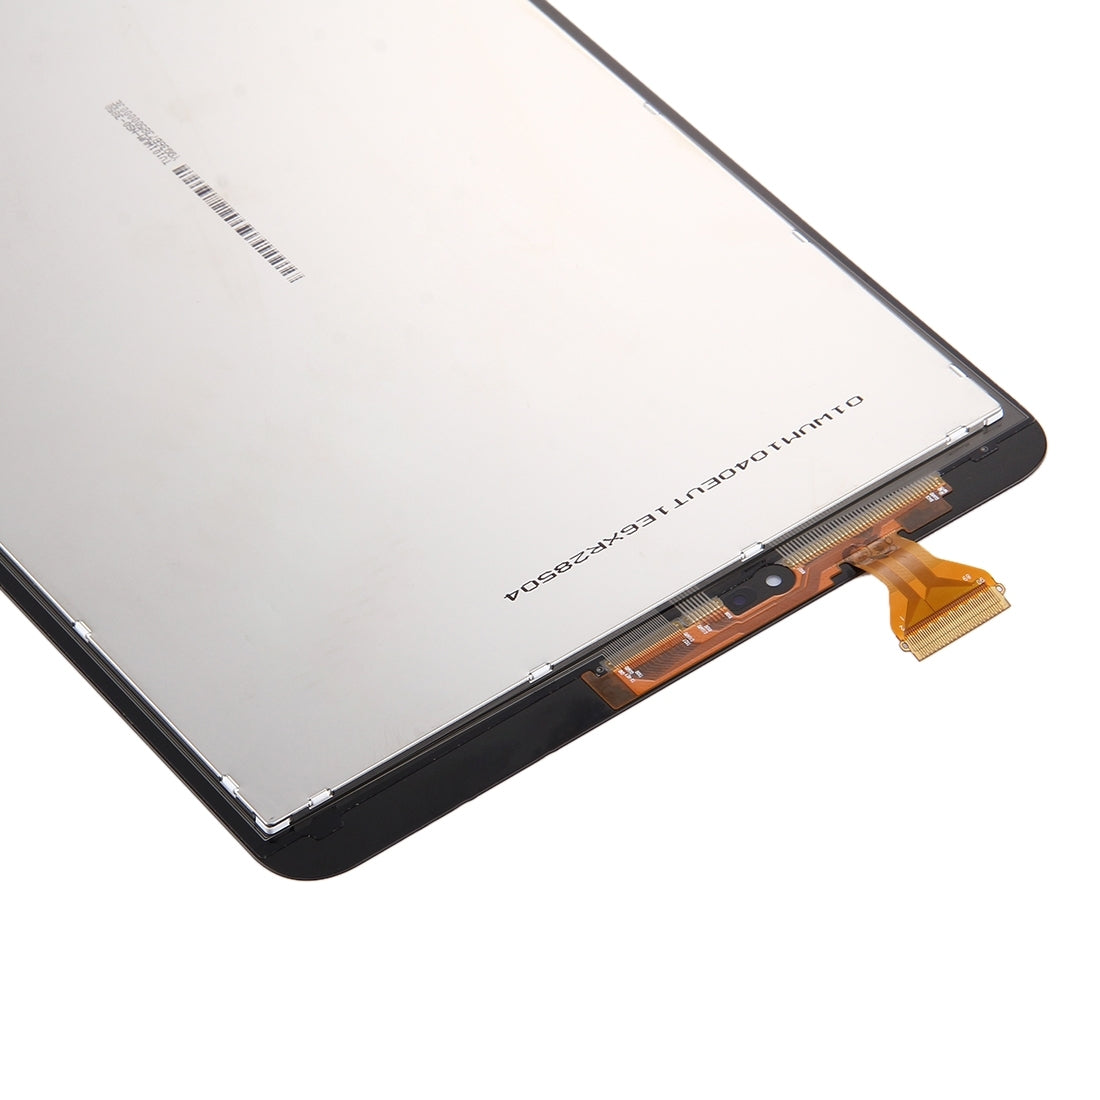 Pantalla LCD + Tactil Digitalizador Samsung Galaxy Tab A 10.1 / T585 Negro